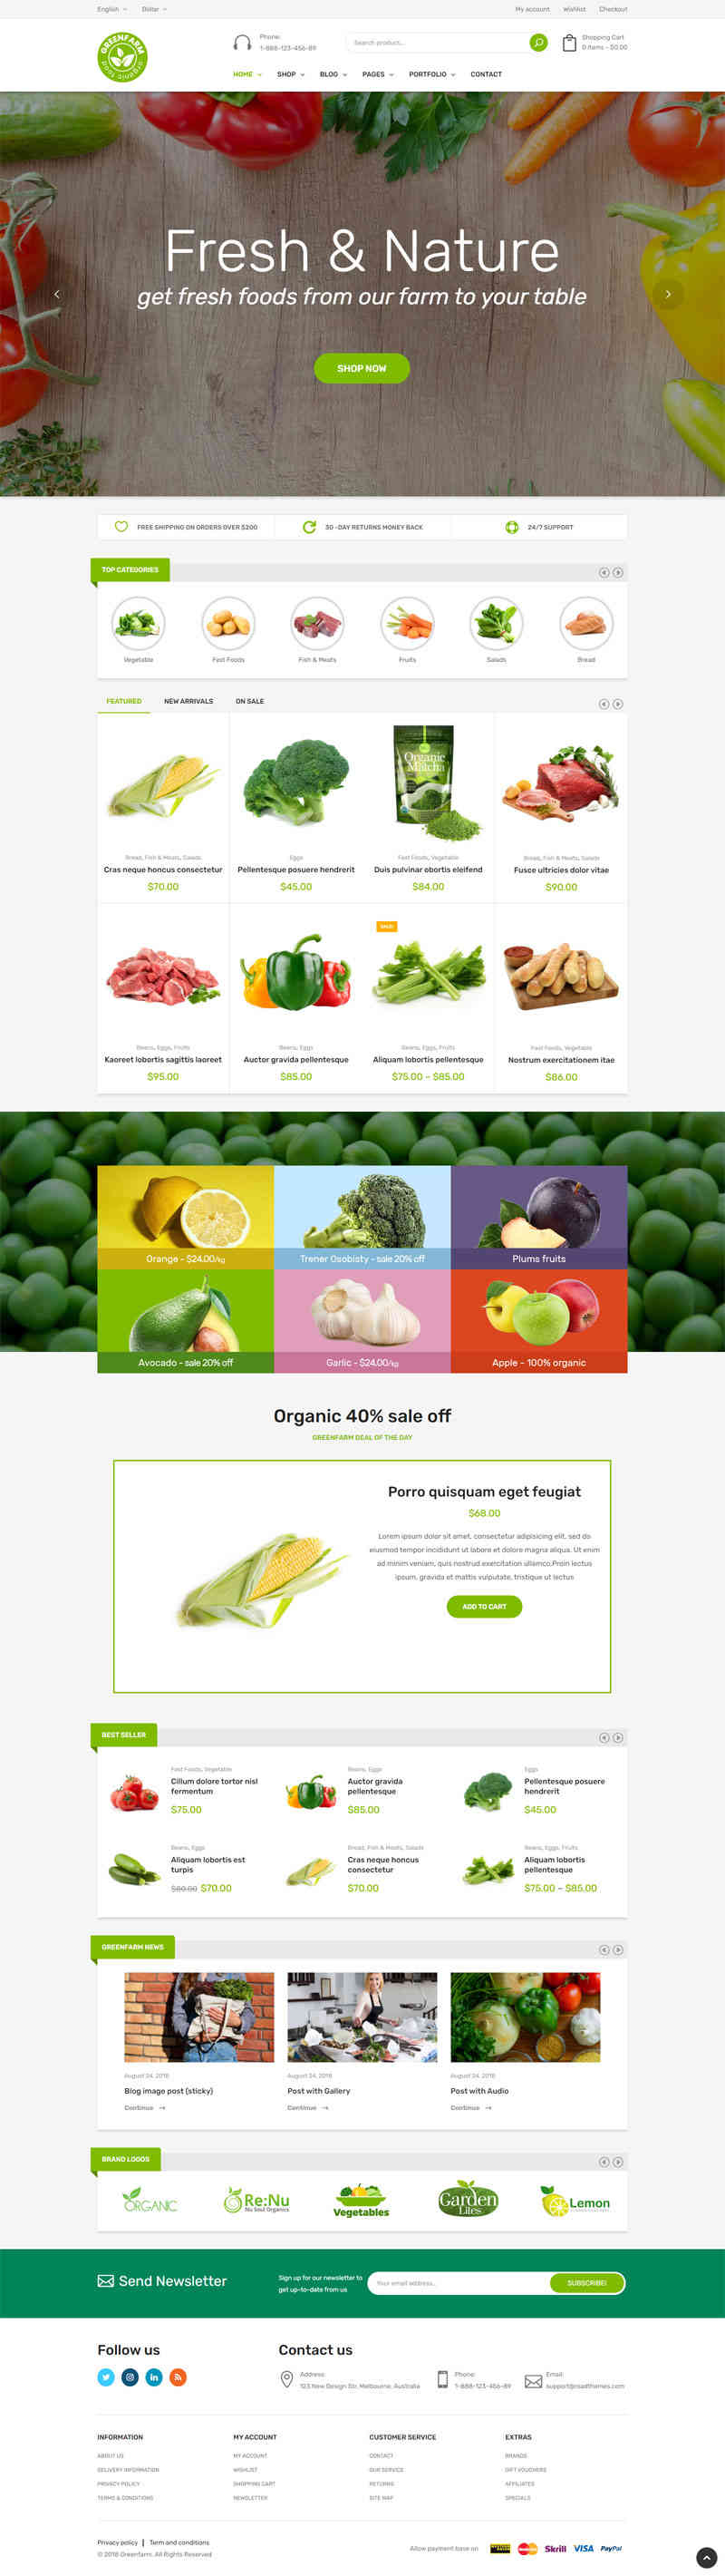 thiet ke website tmi organic food 150030